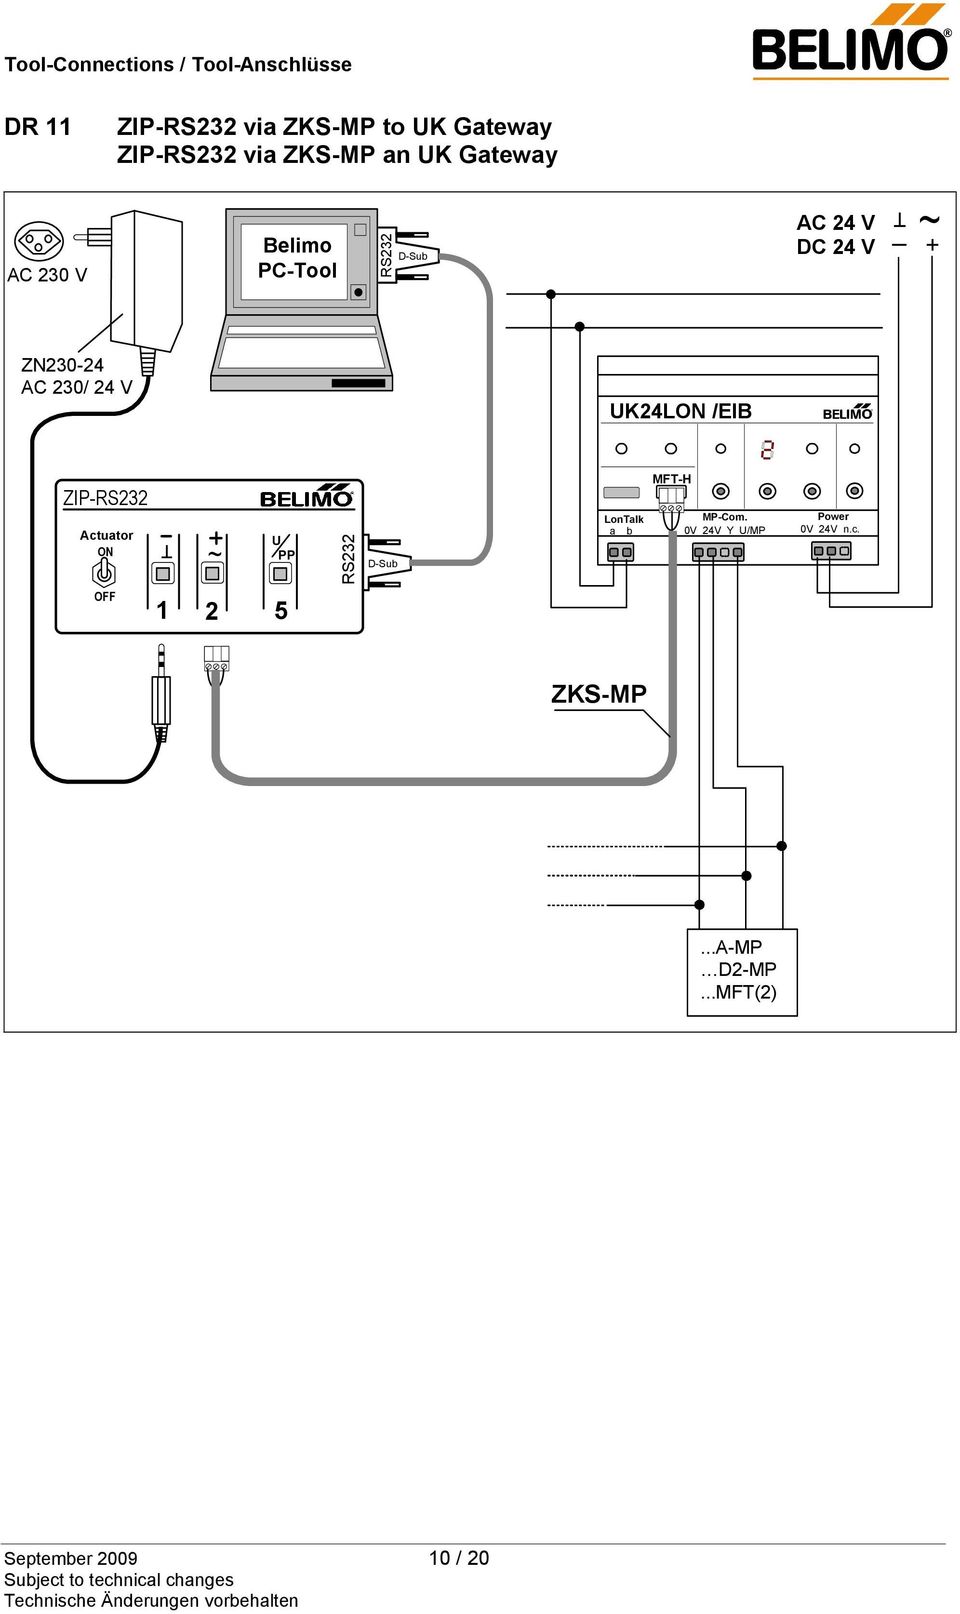 /EIB ZIP RS232 Actuator ON ~ T U PP RS232 D Sub LonTalk a b MFT H MP Com.